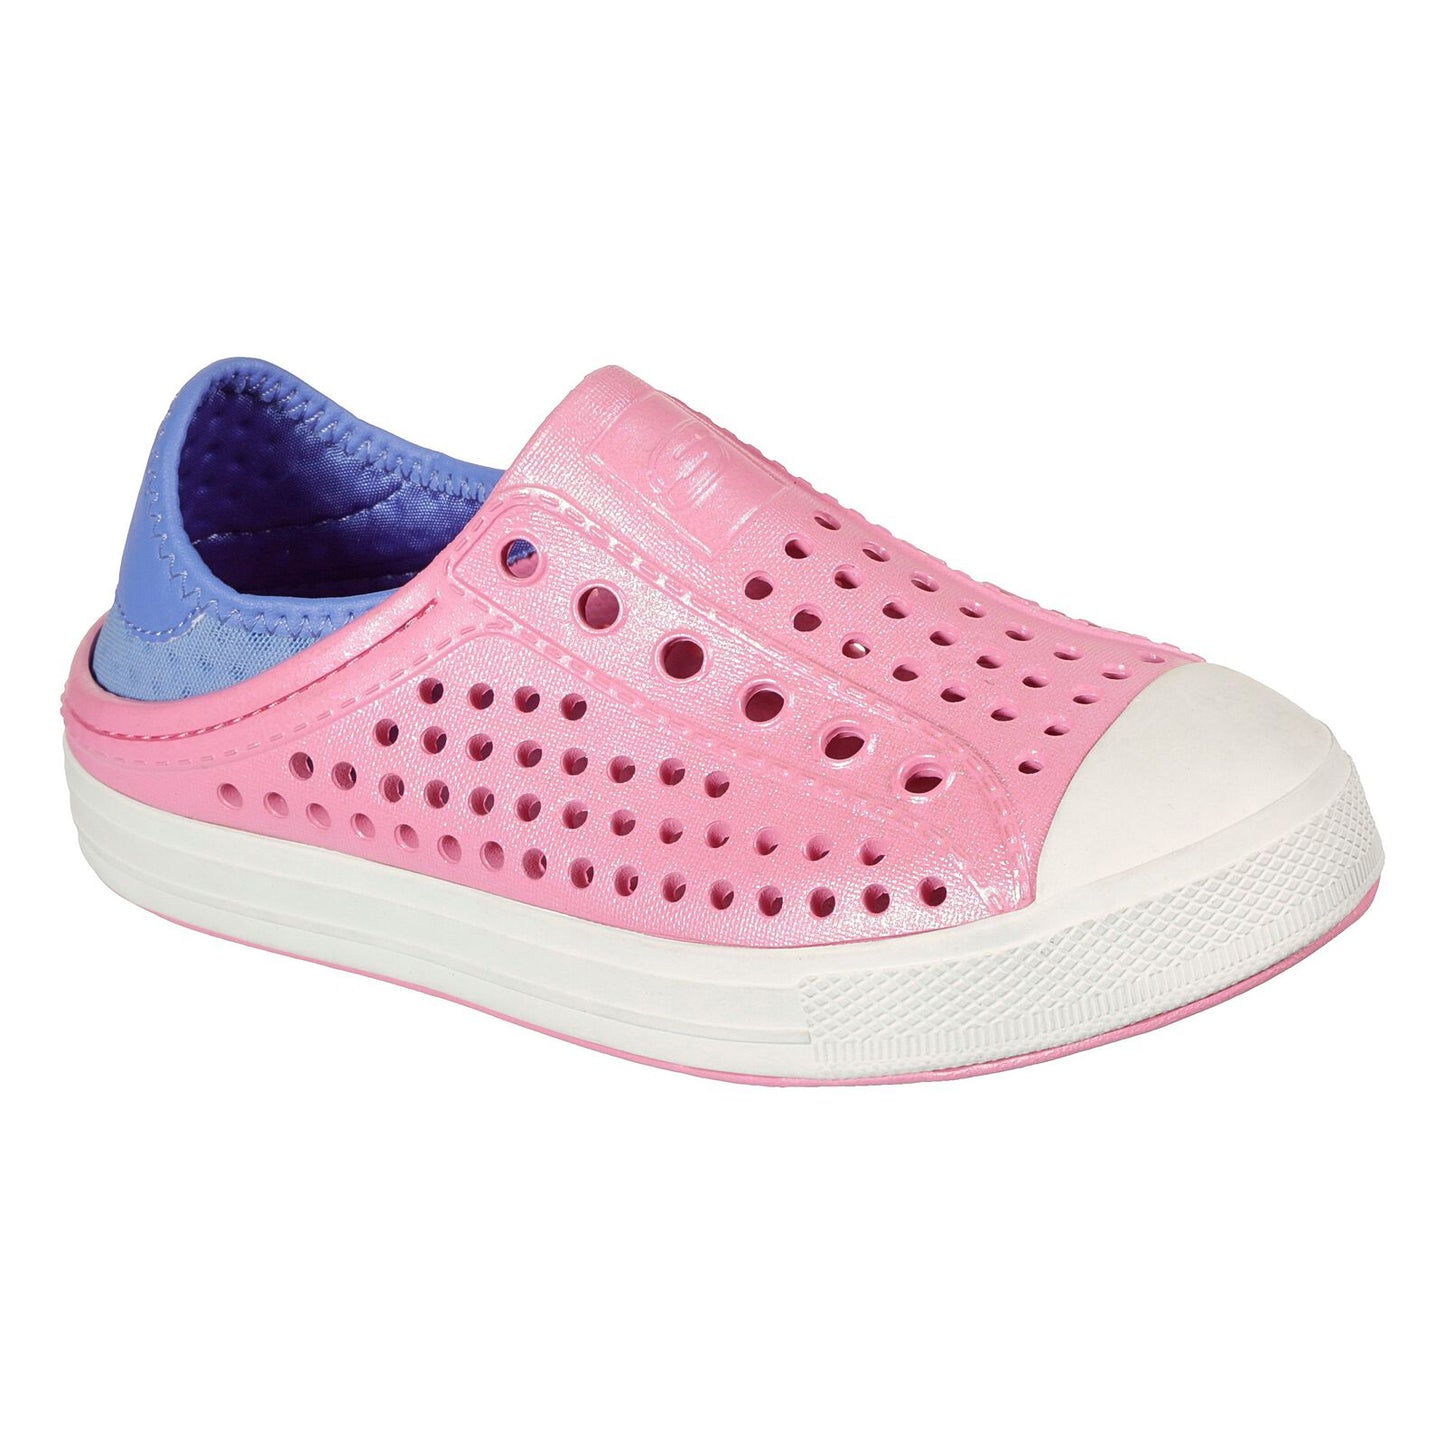 Skechers Children Guzman Steps Sandal - Pink/Blue (Kids size 2 to 5)